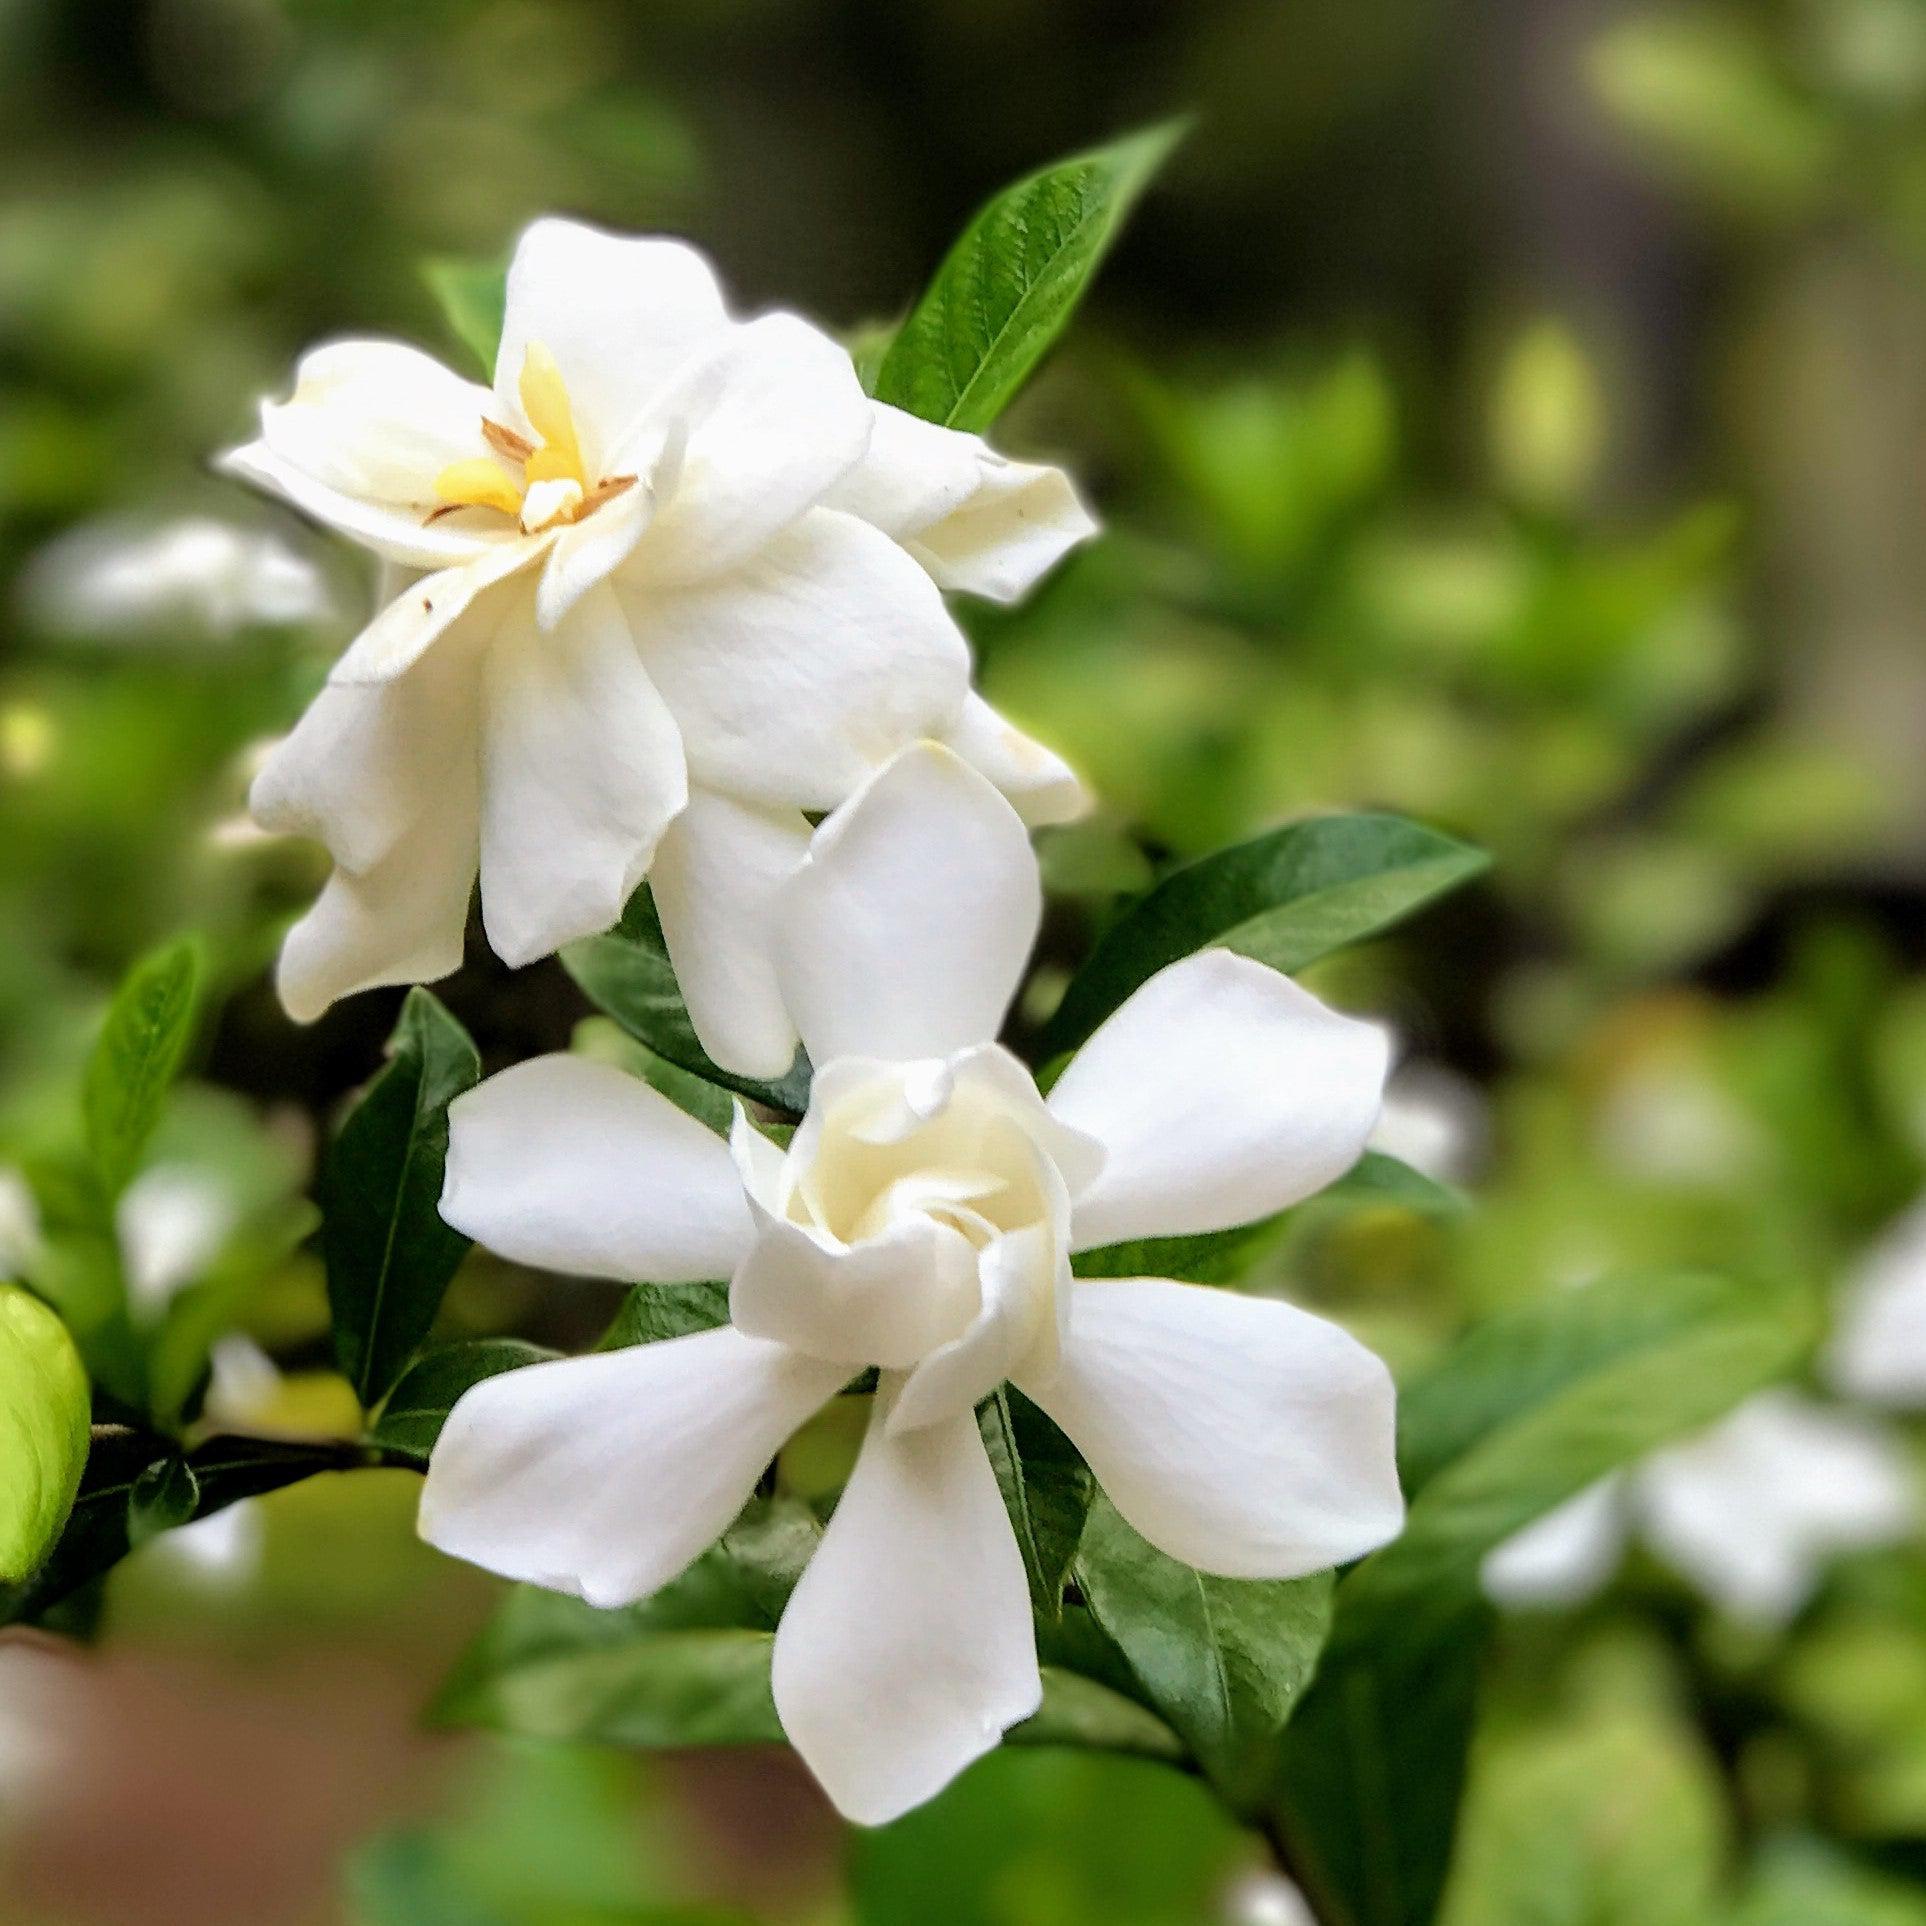 Monrovia White Frostproof Gardenia Flowering Shrub In Pot (With